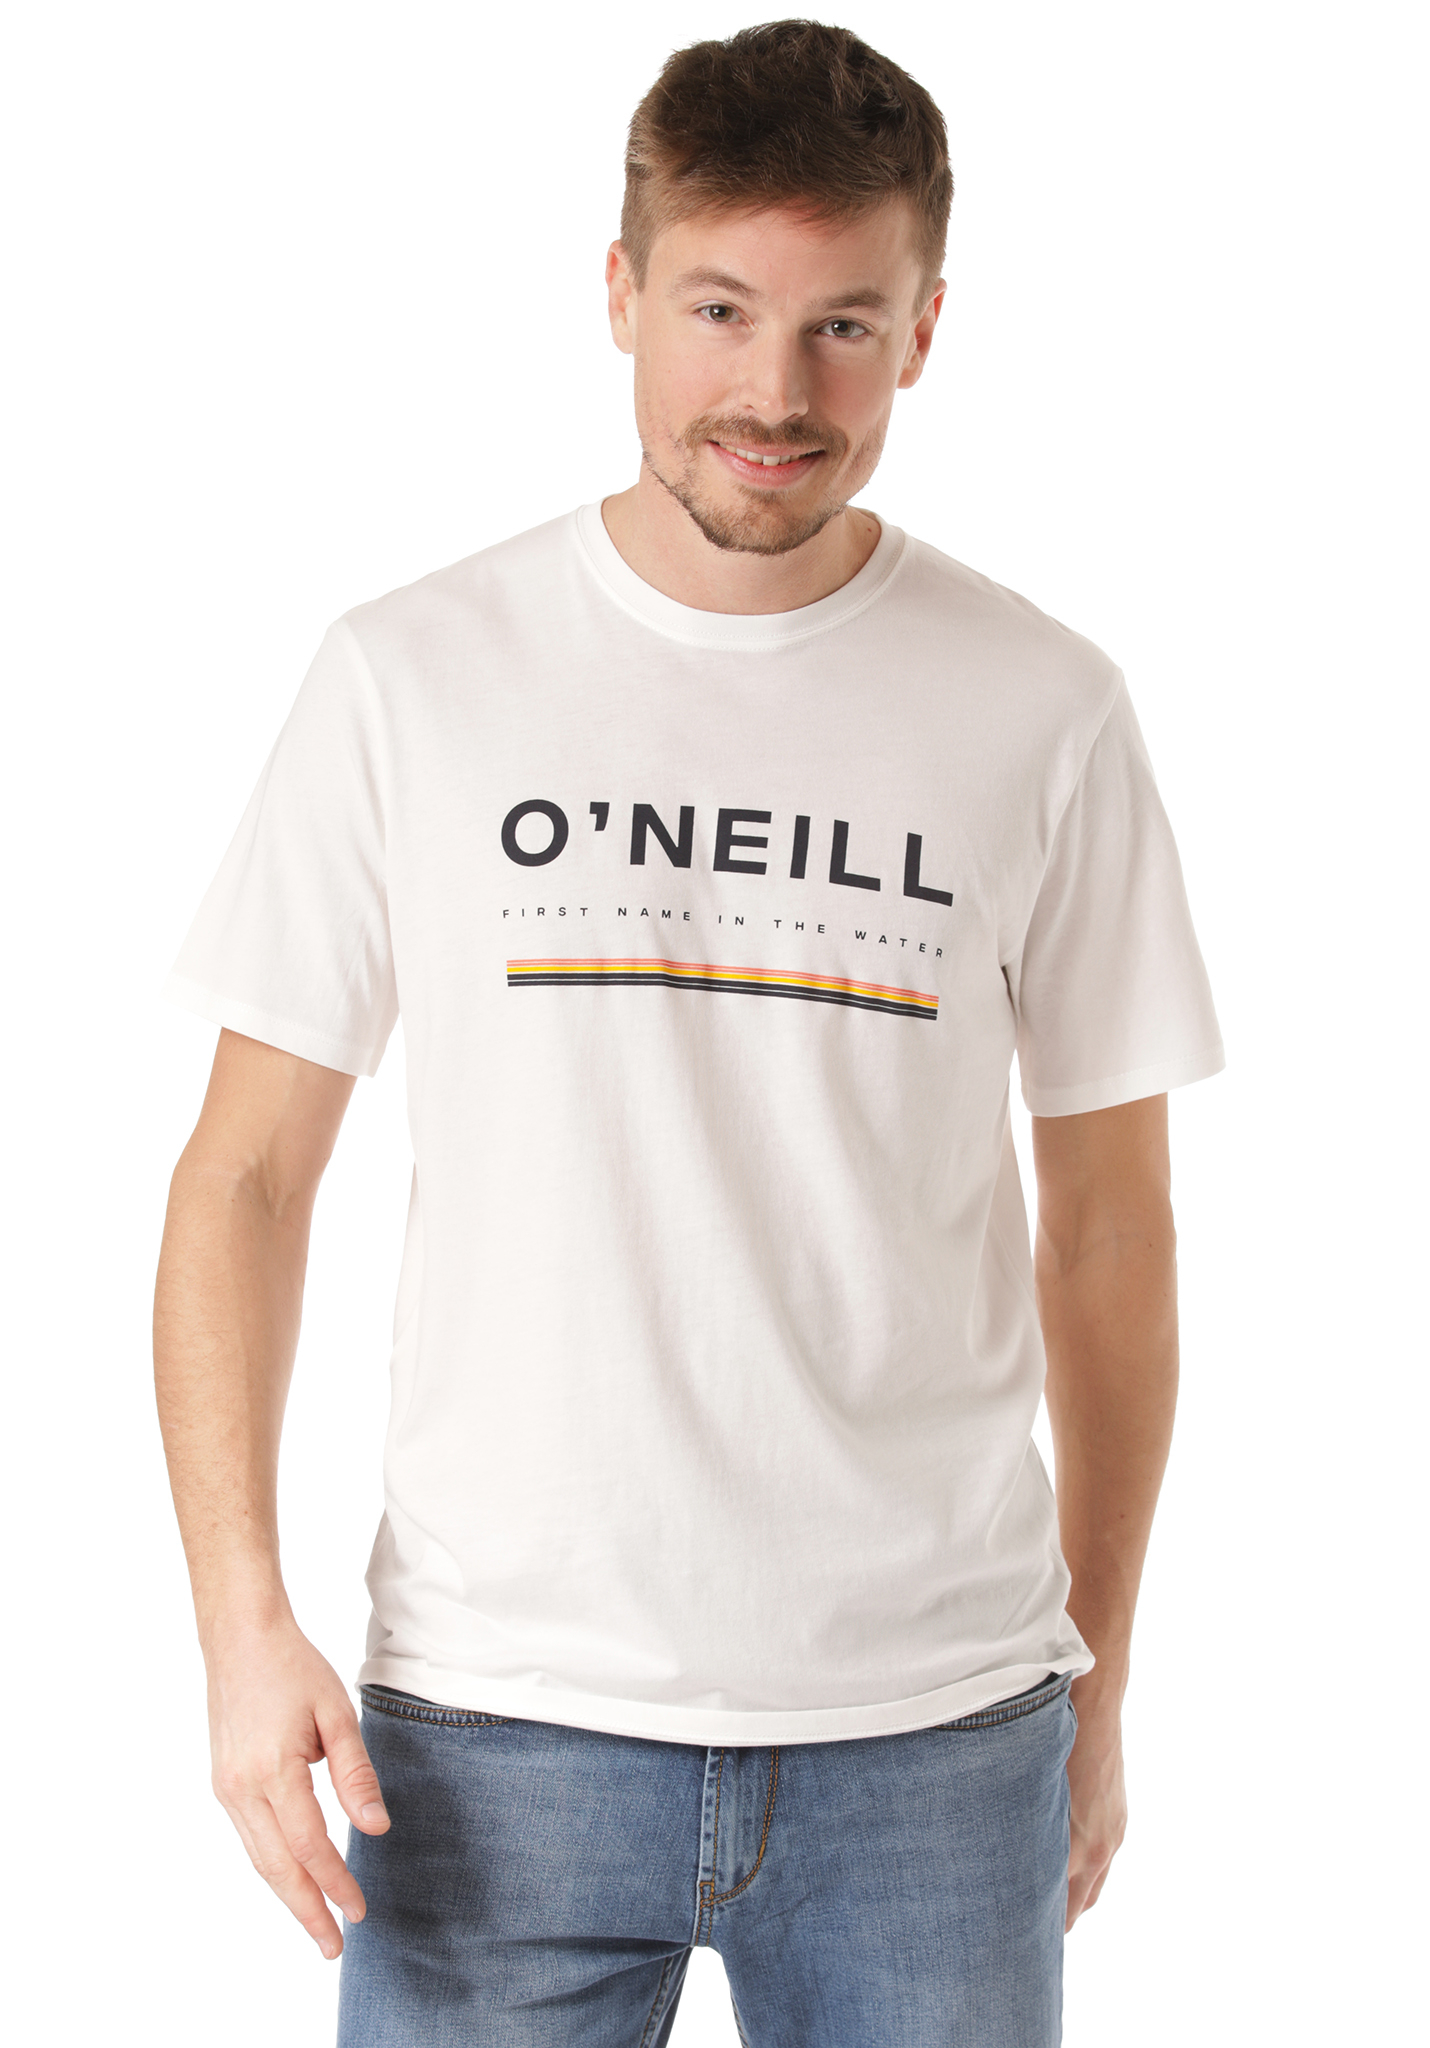 O'Neill Arrowhead T-Shirt weiß XXL